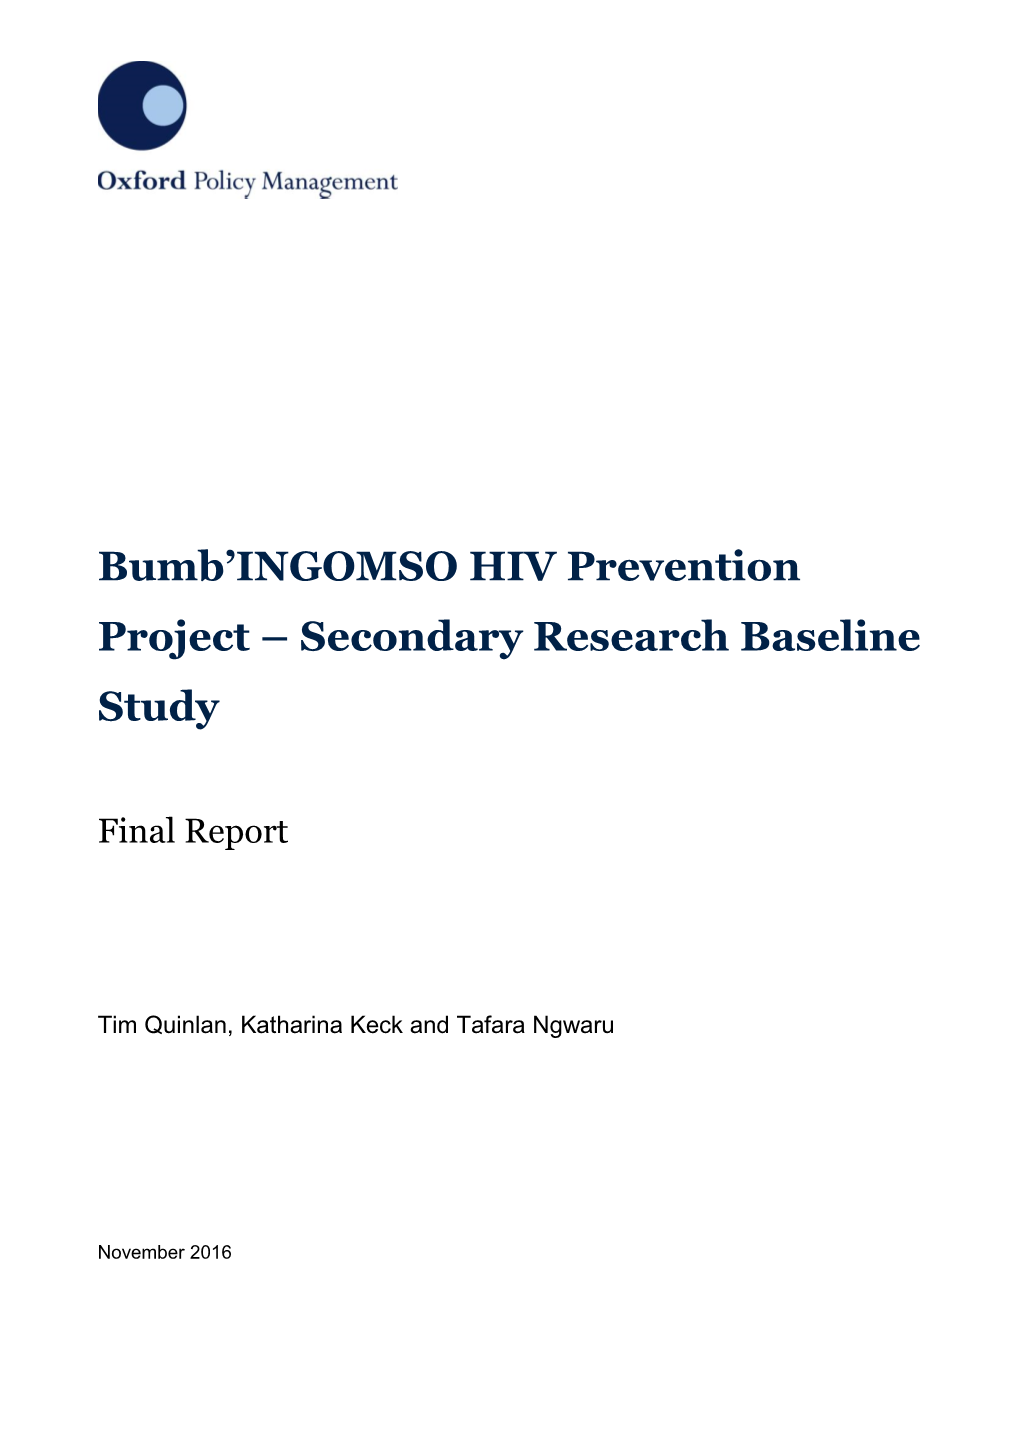 Bumb'ingomso HIV Prevention Project